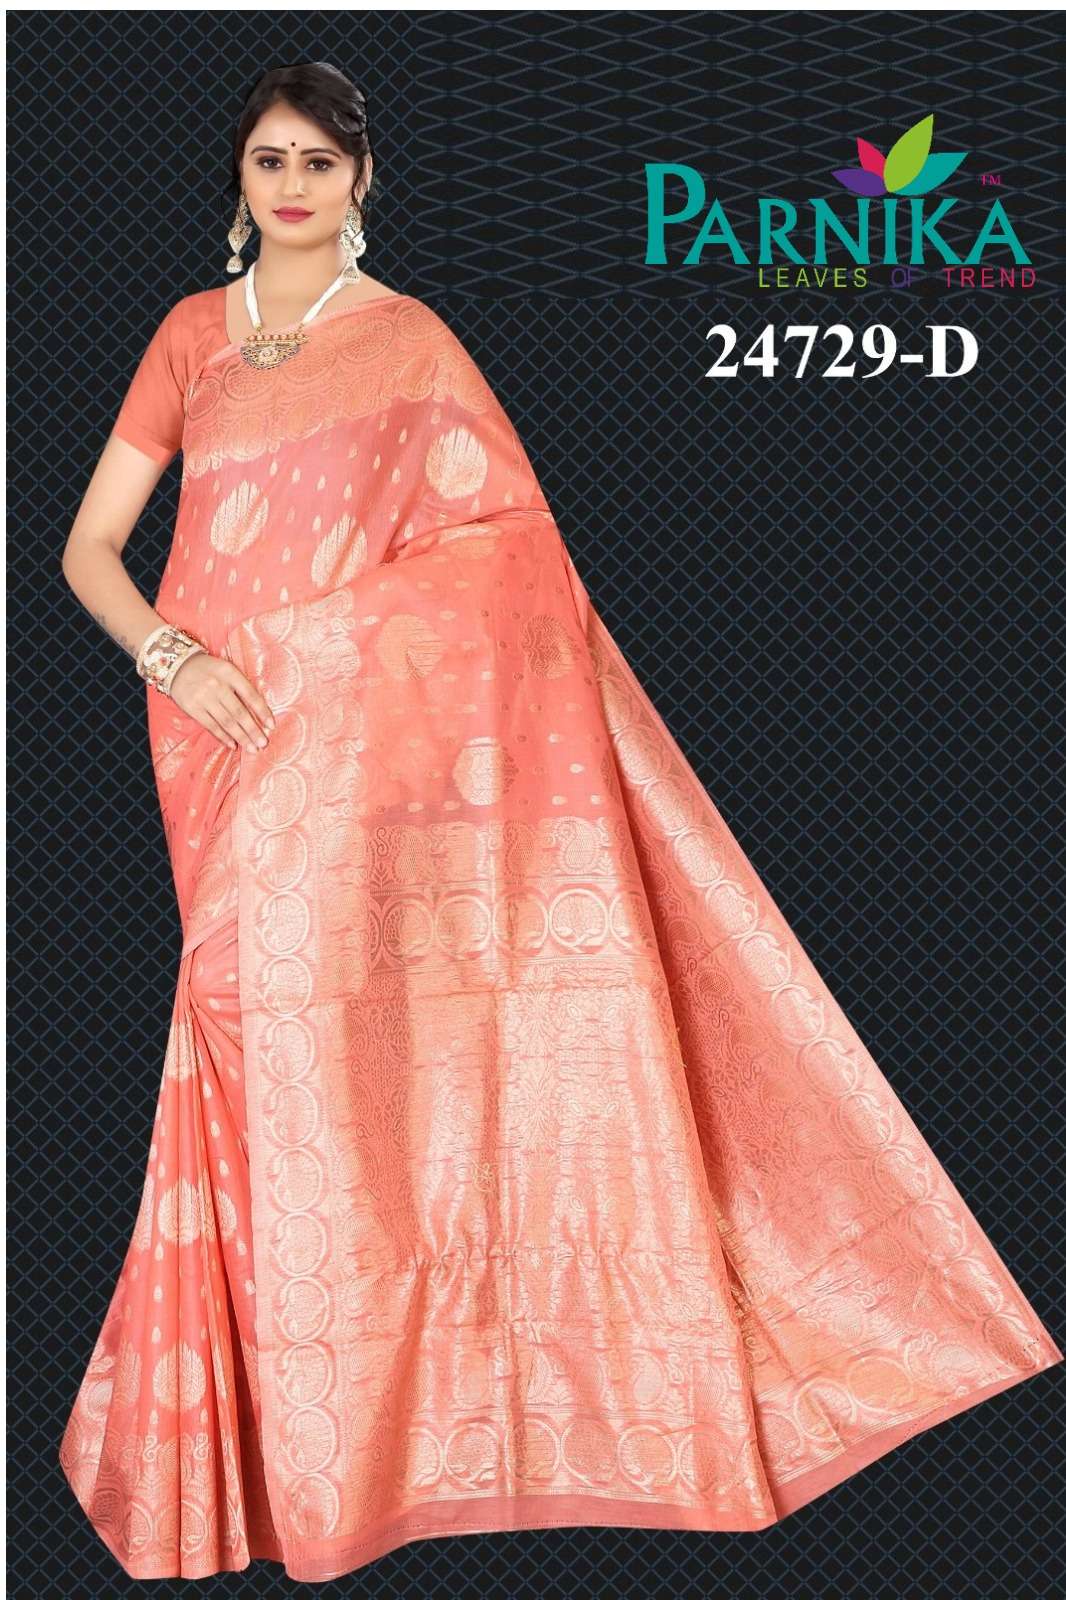 Parnika India Cotton Spun Sarees Festive Wear Wedding Saree in Wholesale rate - 24729  